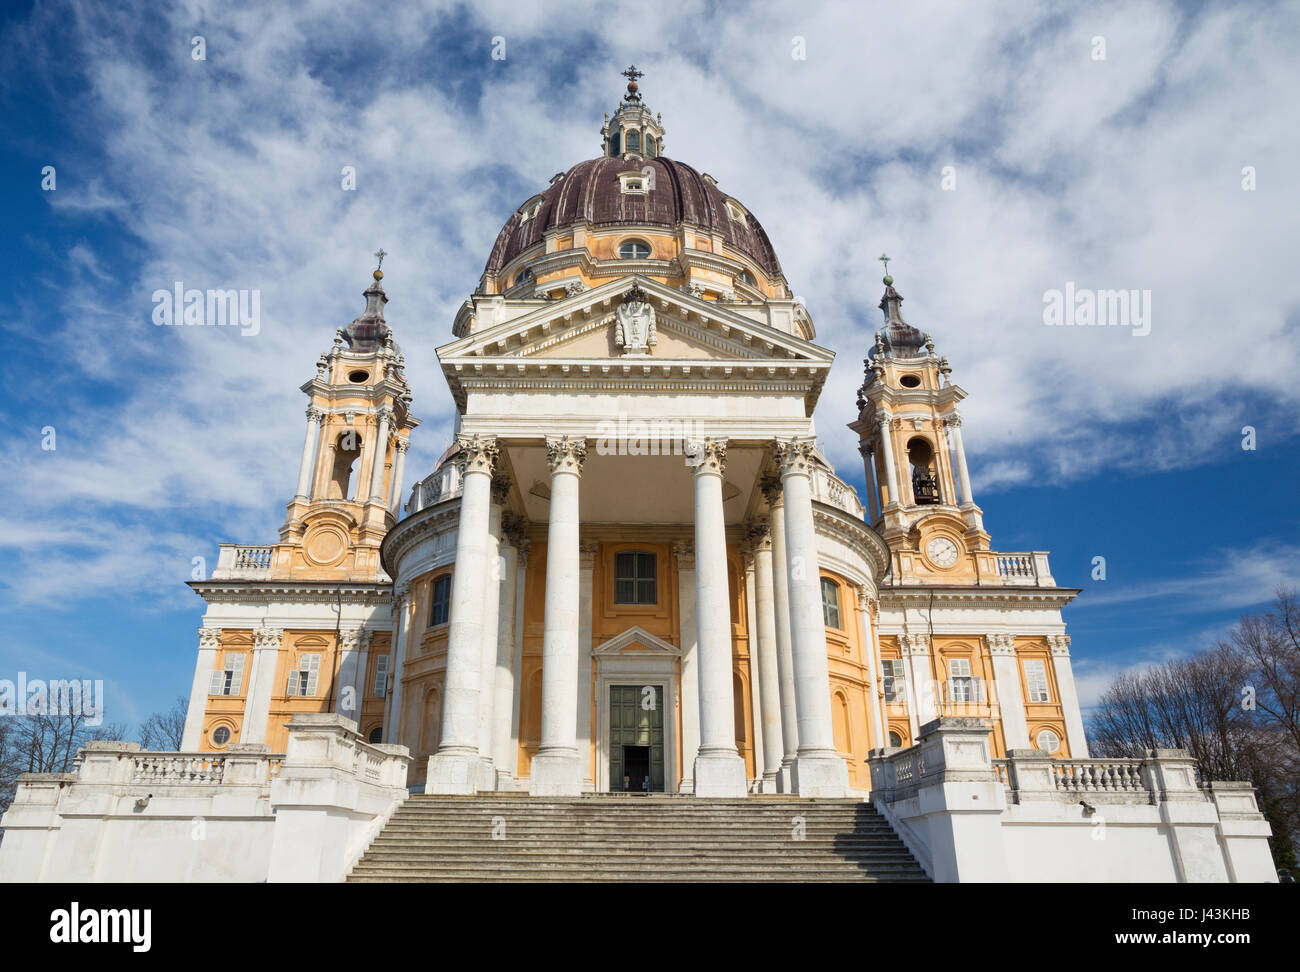 Torino - The church Basilica di Superga Stock Photo - Alamy